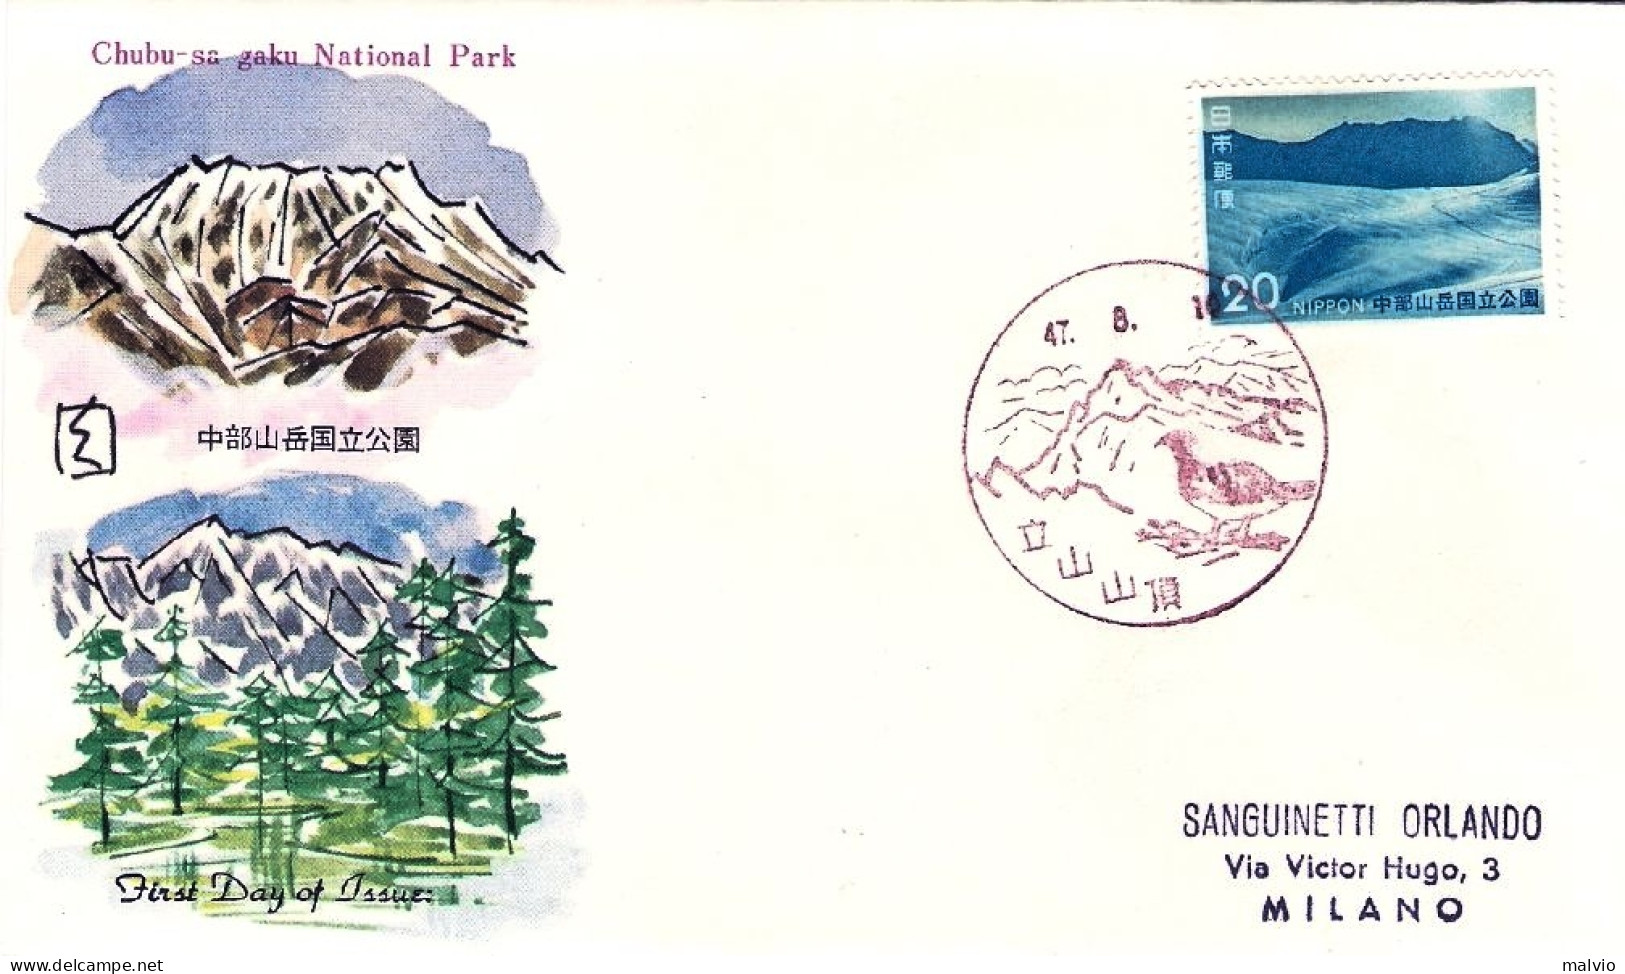 1972-Giappone Japan 20y." Parco Nazionale Chubu Sangaku" Su Fdc - FDC